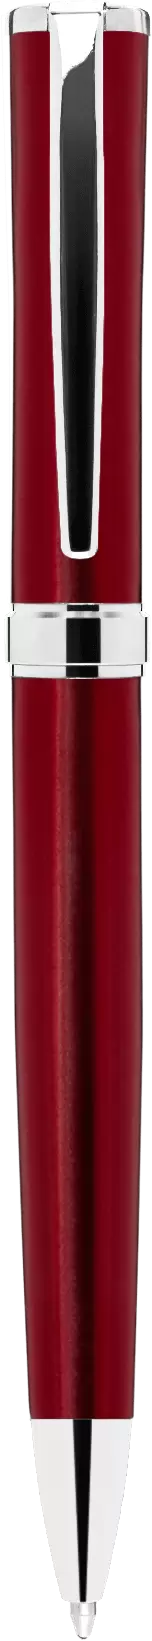 Ручка COSMO MIRROR Красная матовая 3070-33